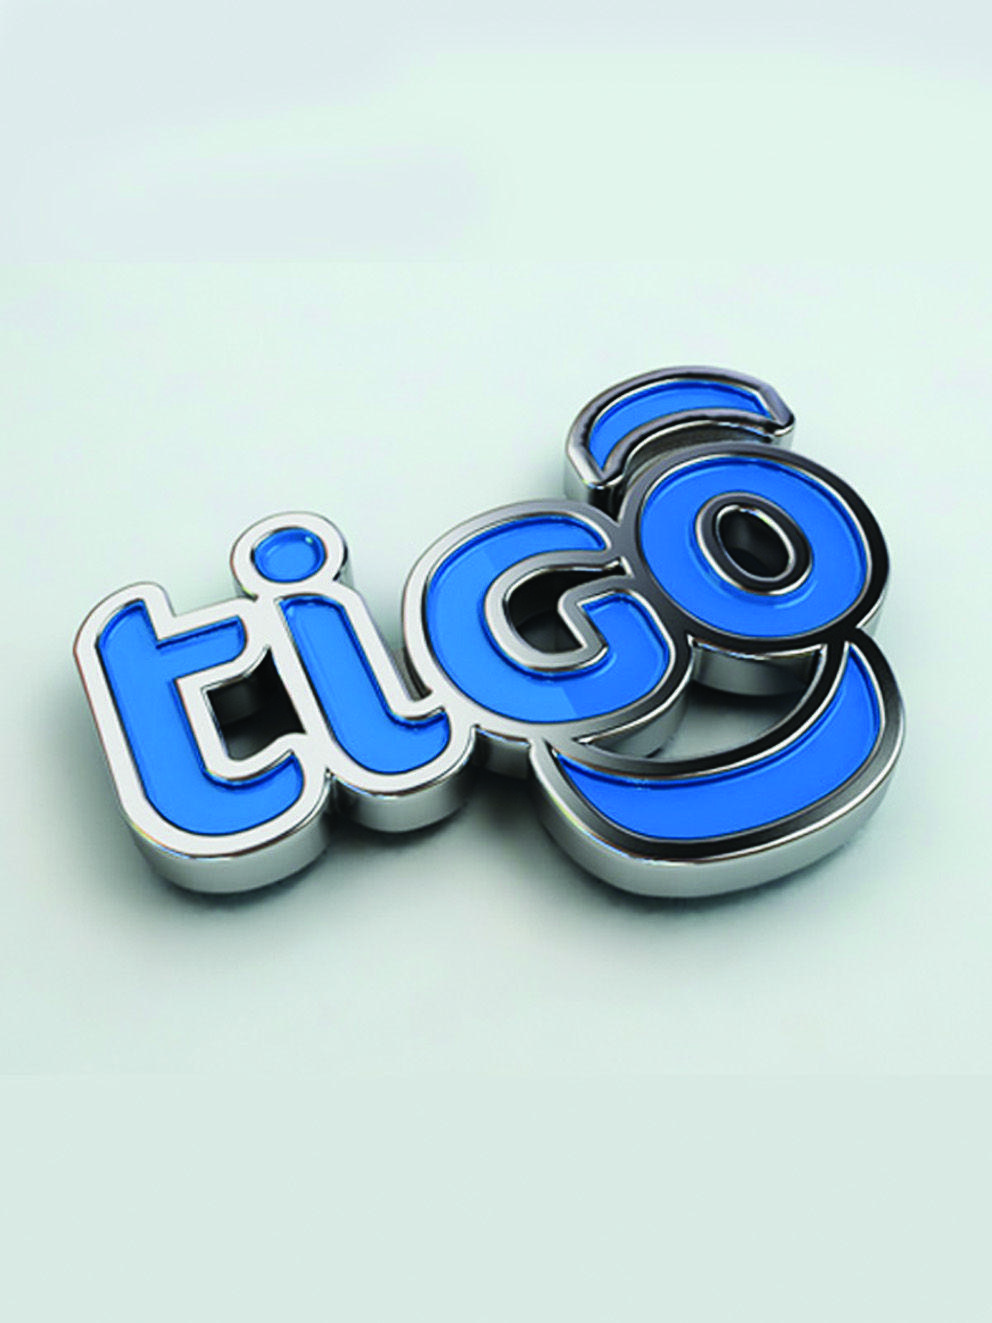 Pin Company Logo - Tigo Lapel Pin #Branding #Brand #Logo #Lapel #Pins | Branded Pins ...